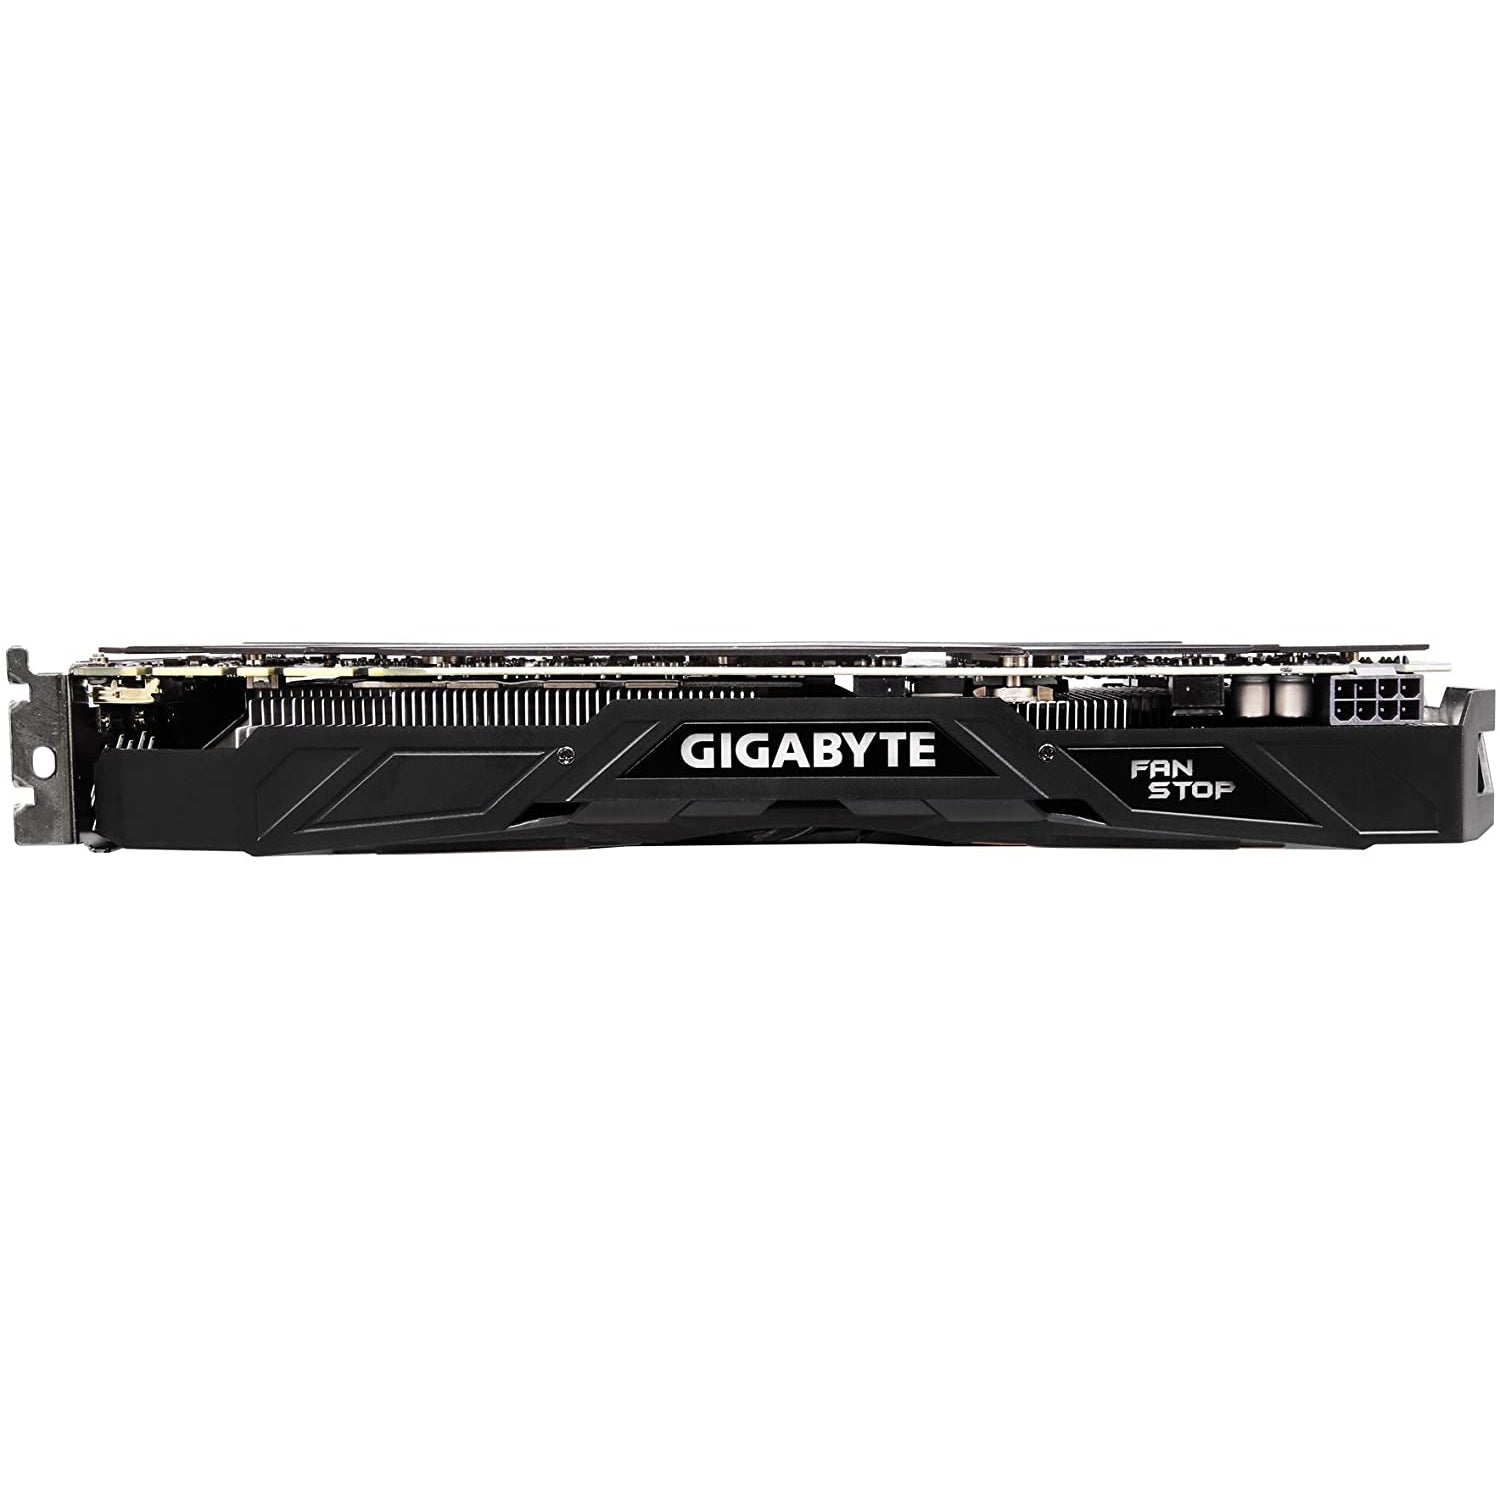 Gigabyte GeForce GTX 1080 G1 Gaming 8G Video Graphics Cards GV-N1080G1